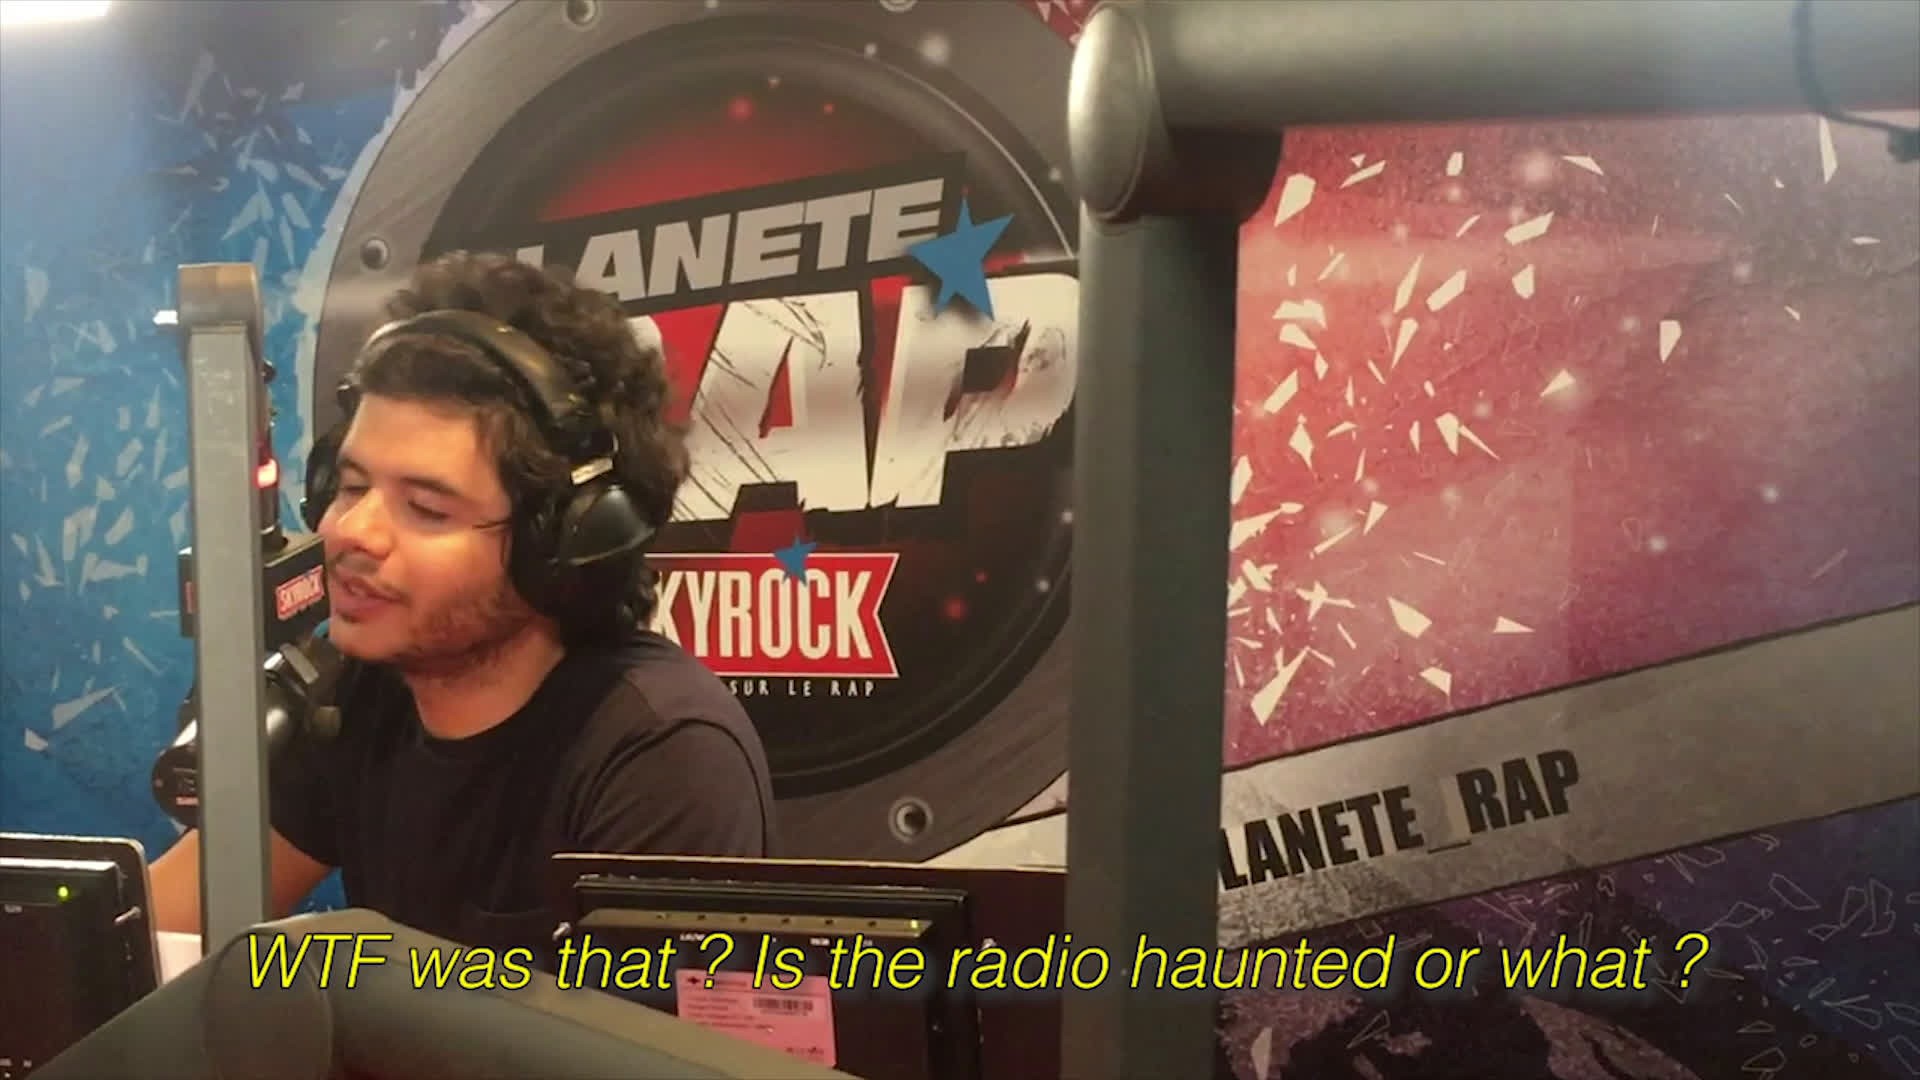 The Haunted Radio